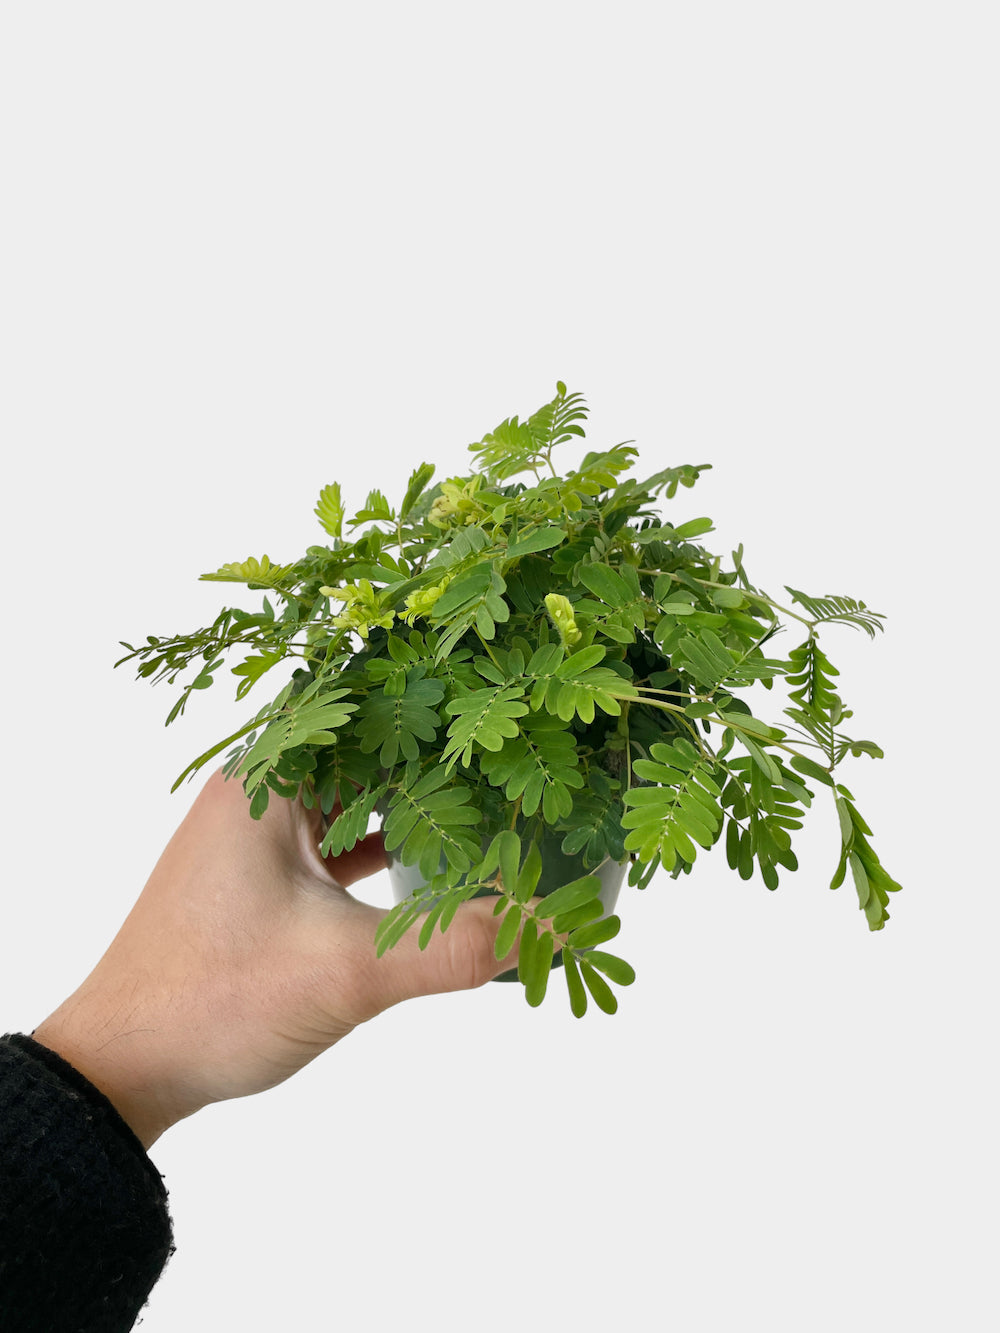 Mimosa pudica aka Sensitive Plant